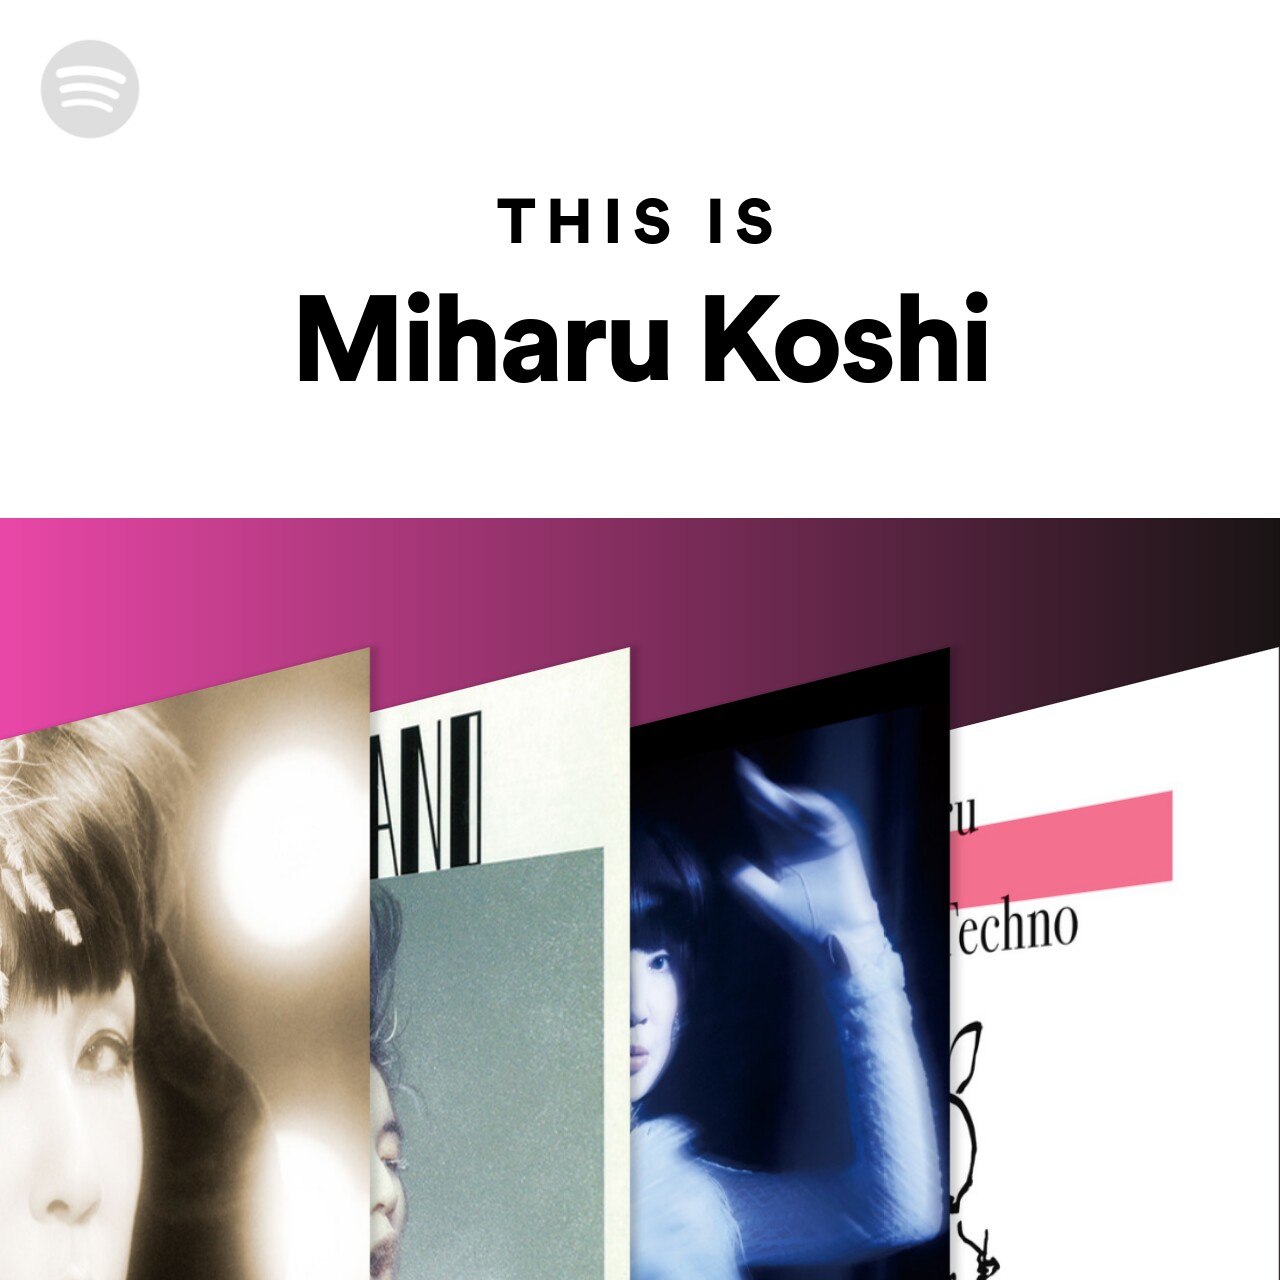 This Is Miharu Koshi